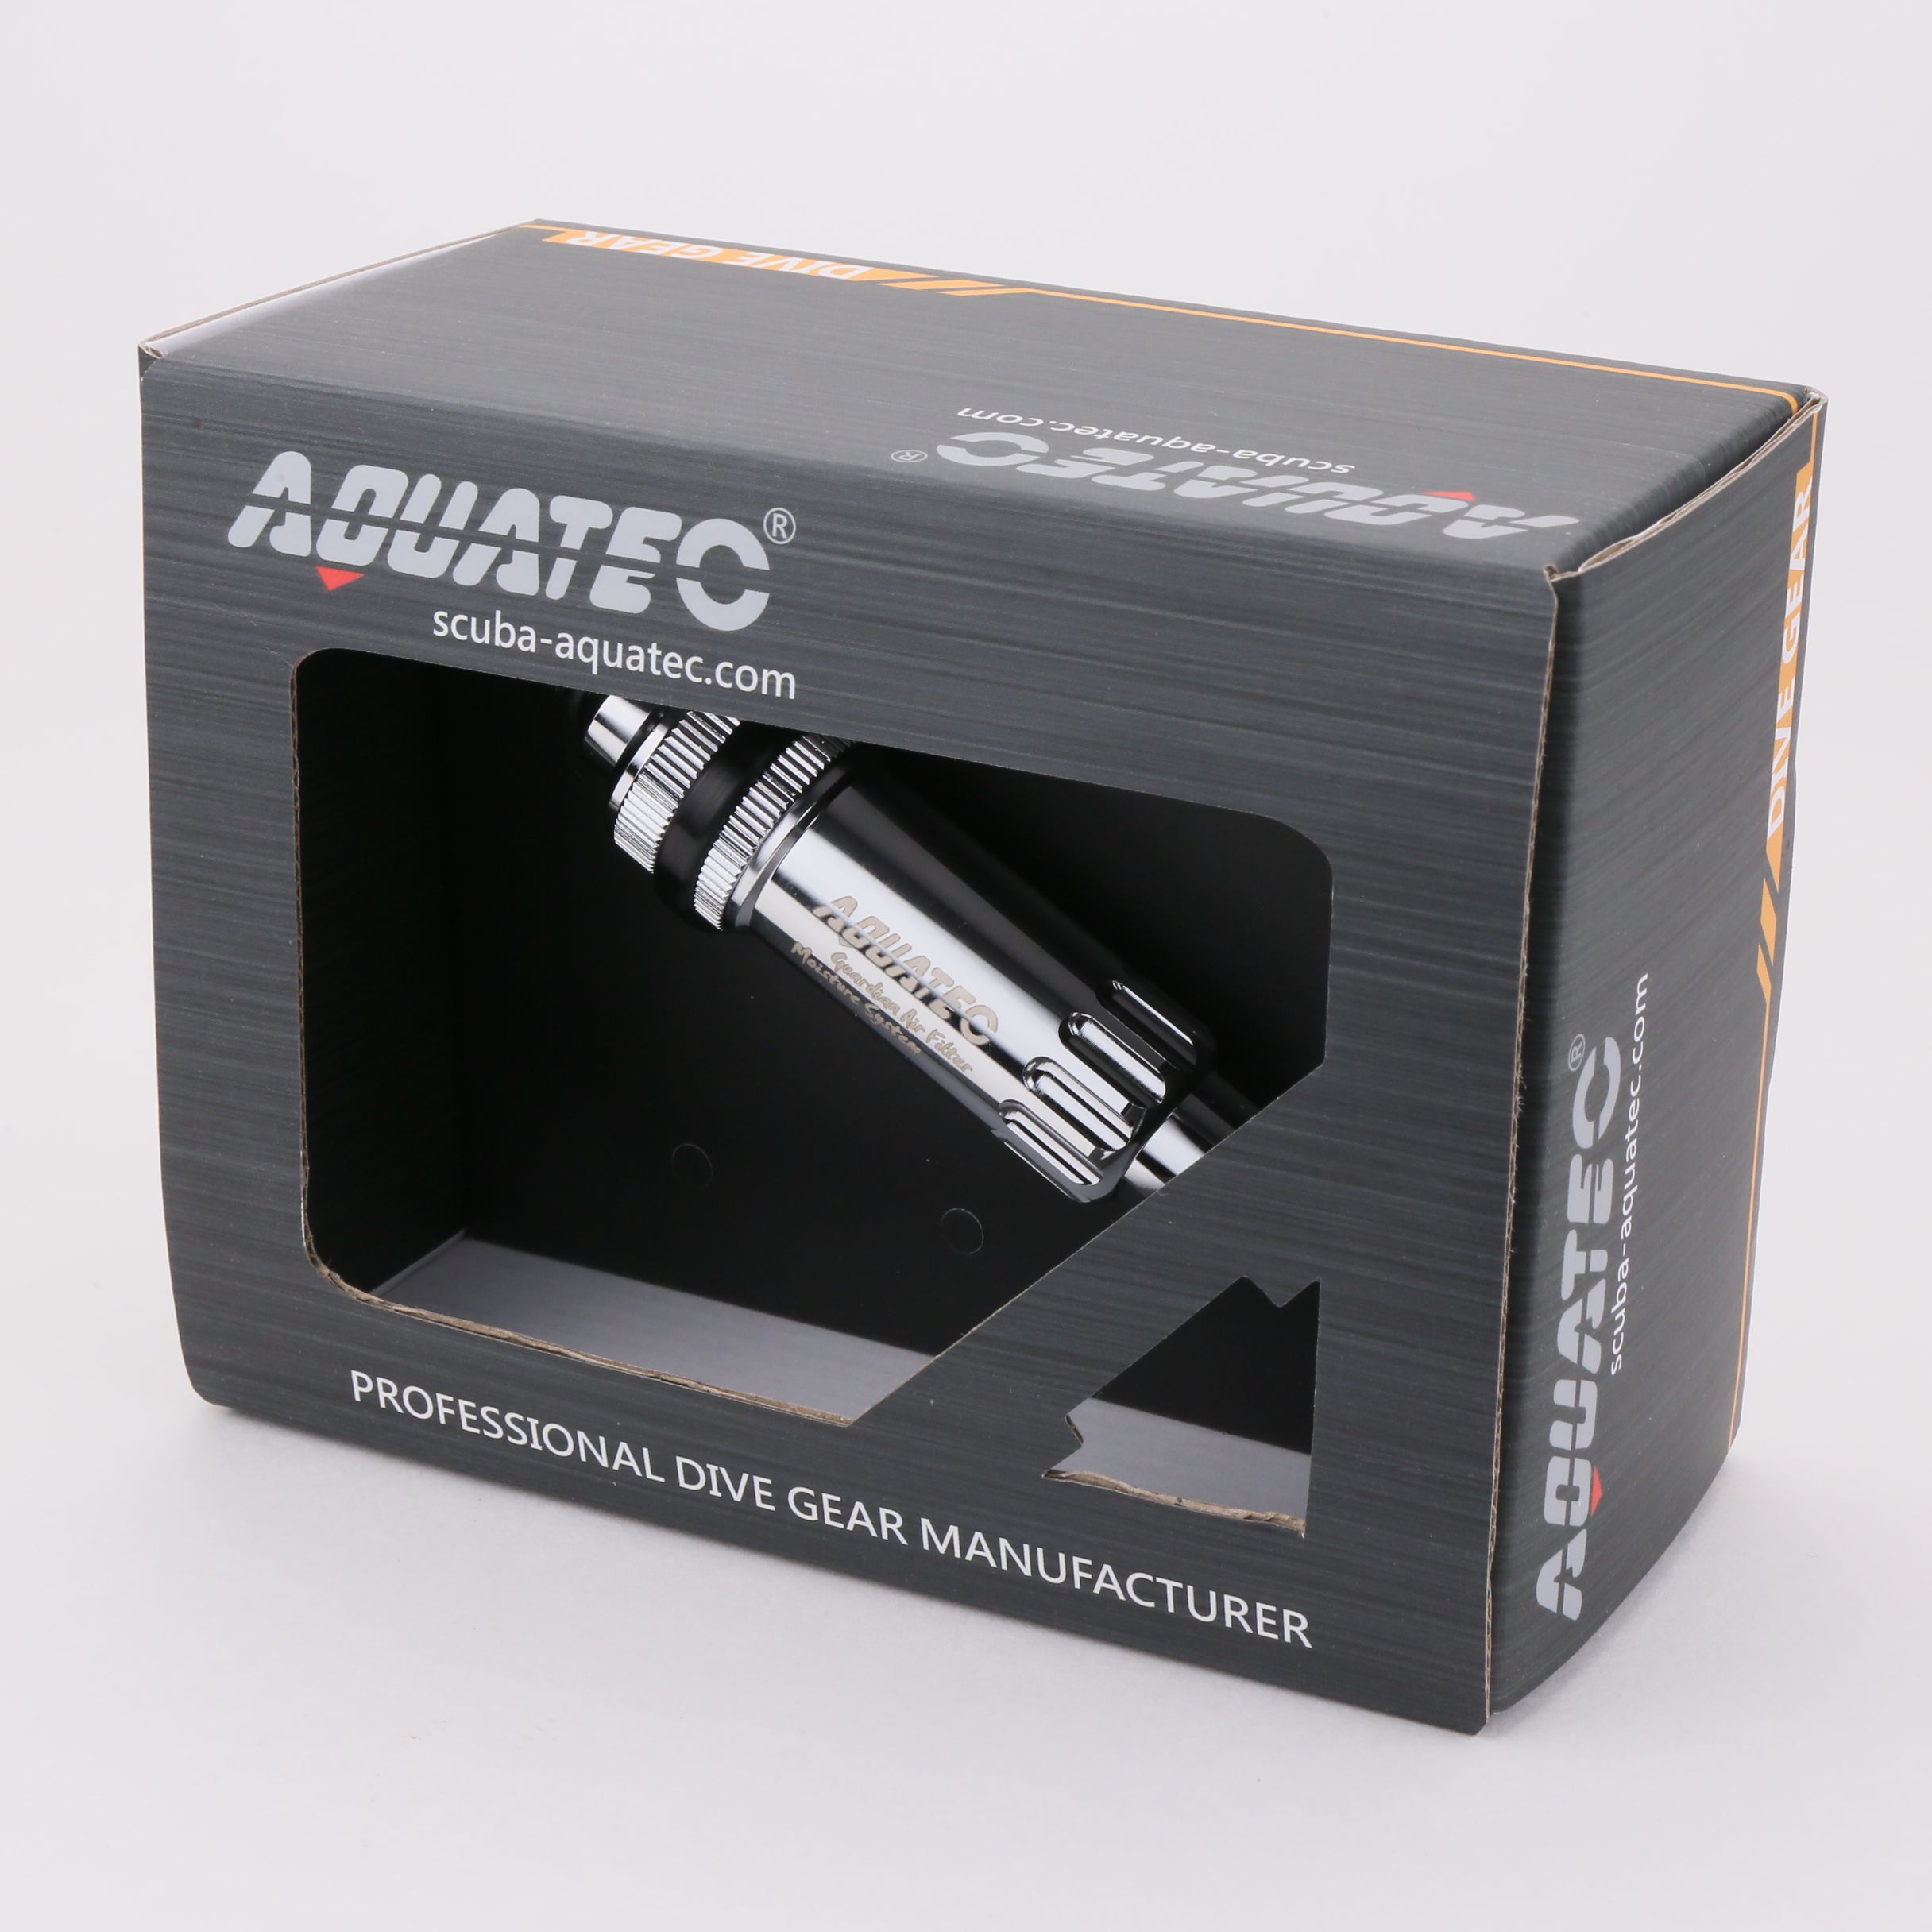 Aquatec Series Guardian Scuba Diving Air Filter Breathe Clean Air Rose FM-200R 